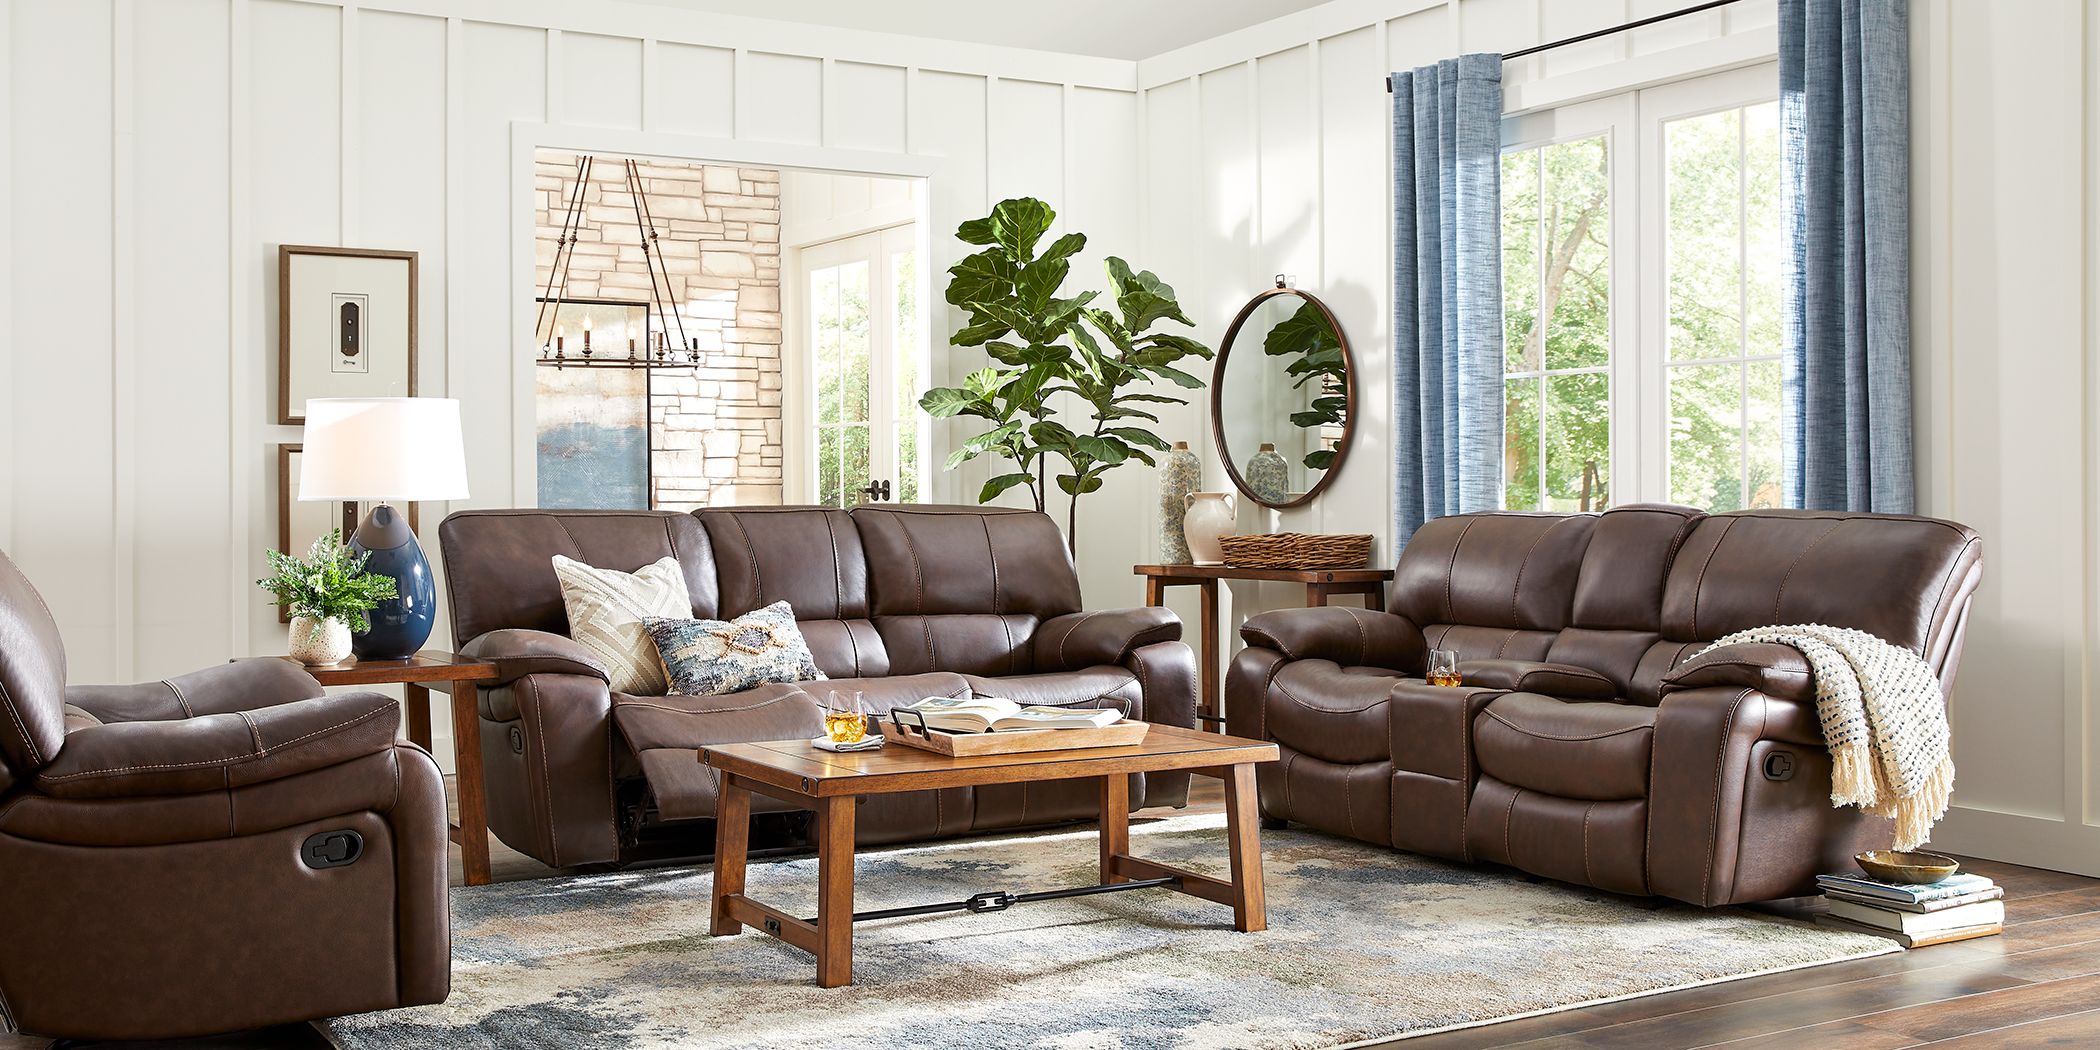 Cindy Crawford Home Leather Furniture, Cindy Crawford Vita Leather Sofa Reviews